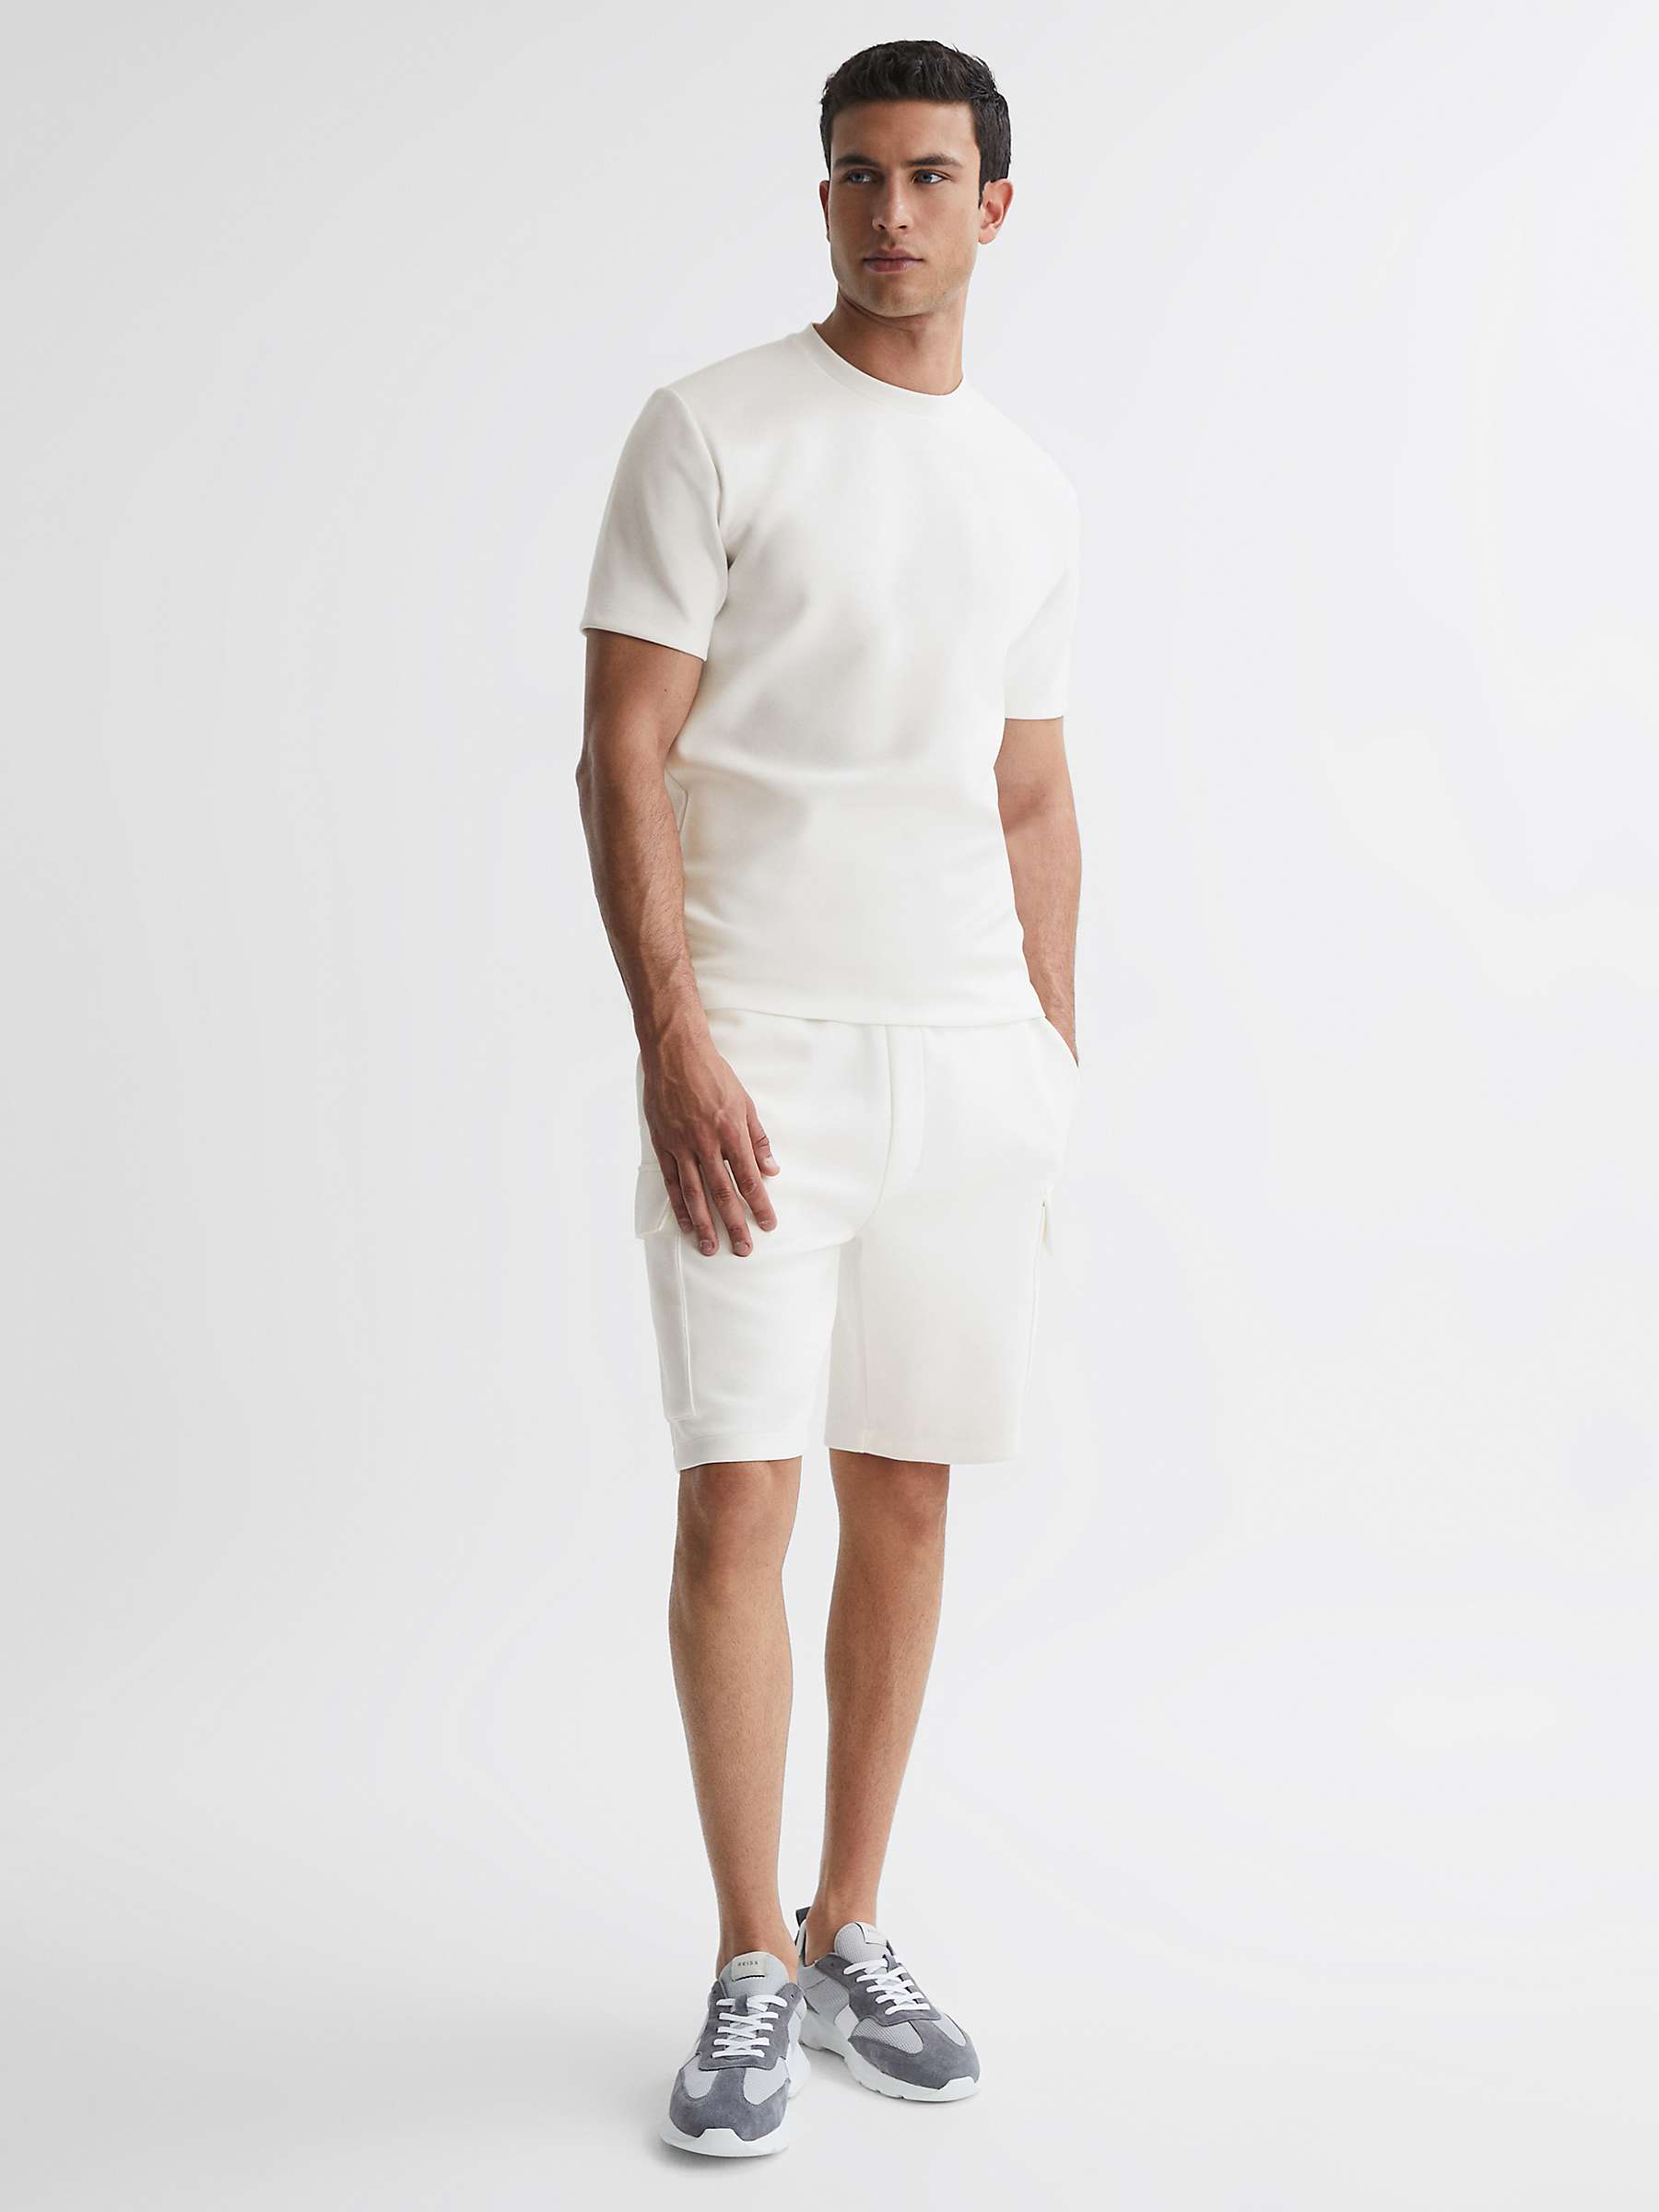 Reiss Bradley T-Shirt, White at John Lewis & Partners